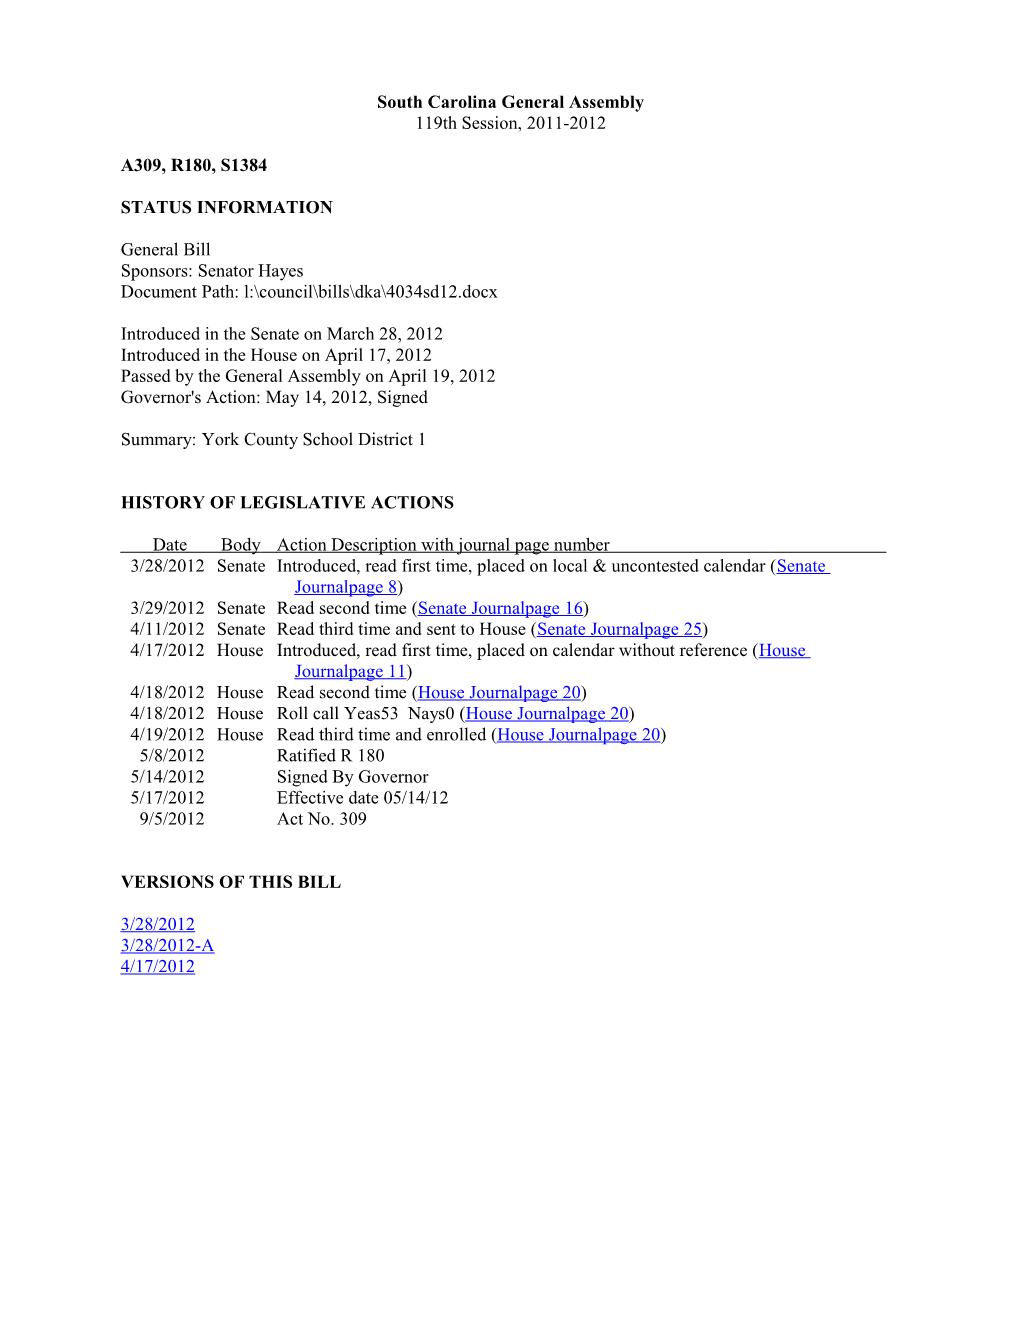 2011-2012 Bill 1384: York County School District 1 - South Carolina Legislature Online